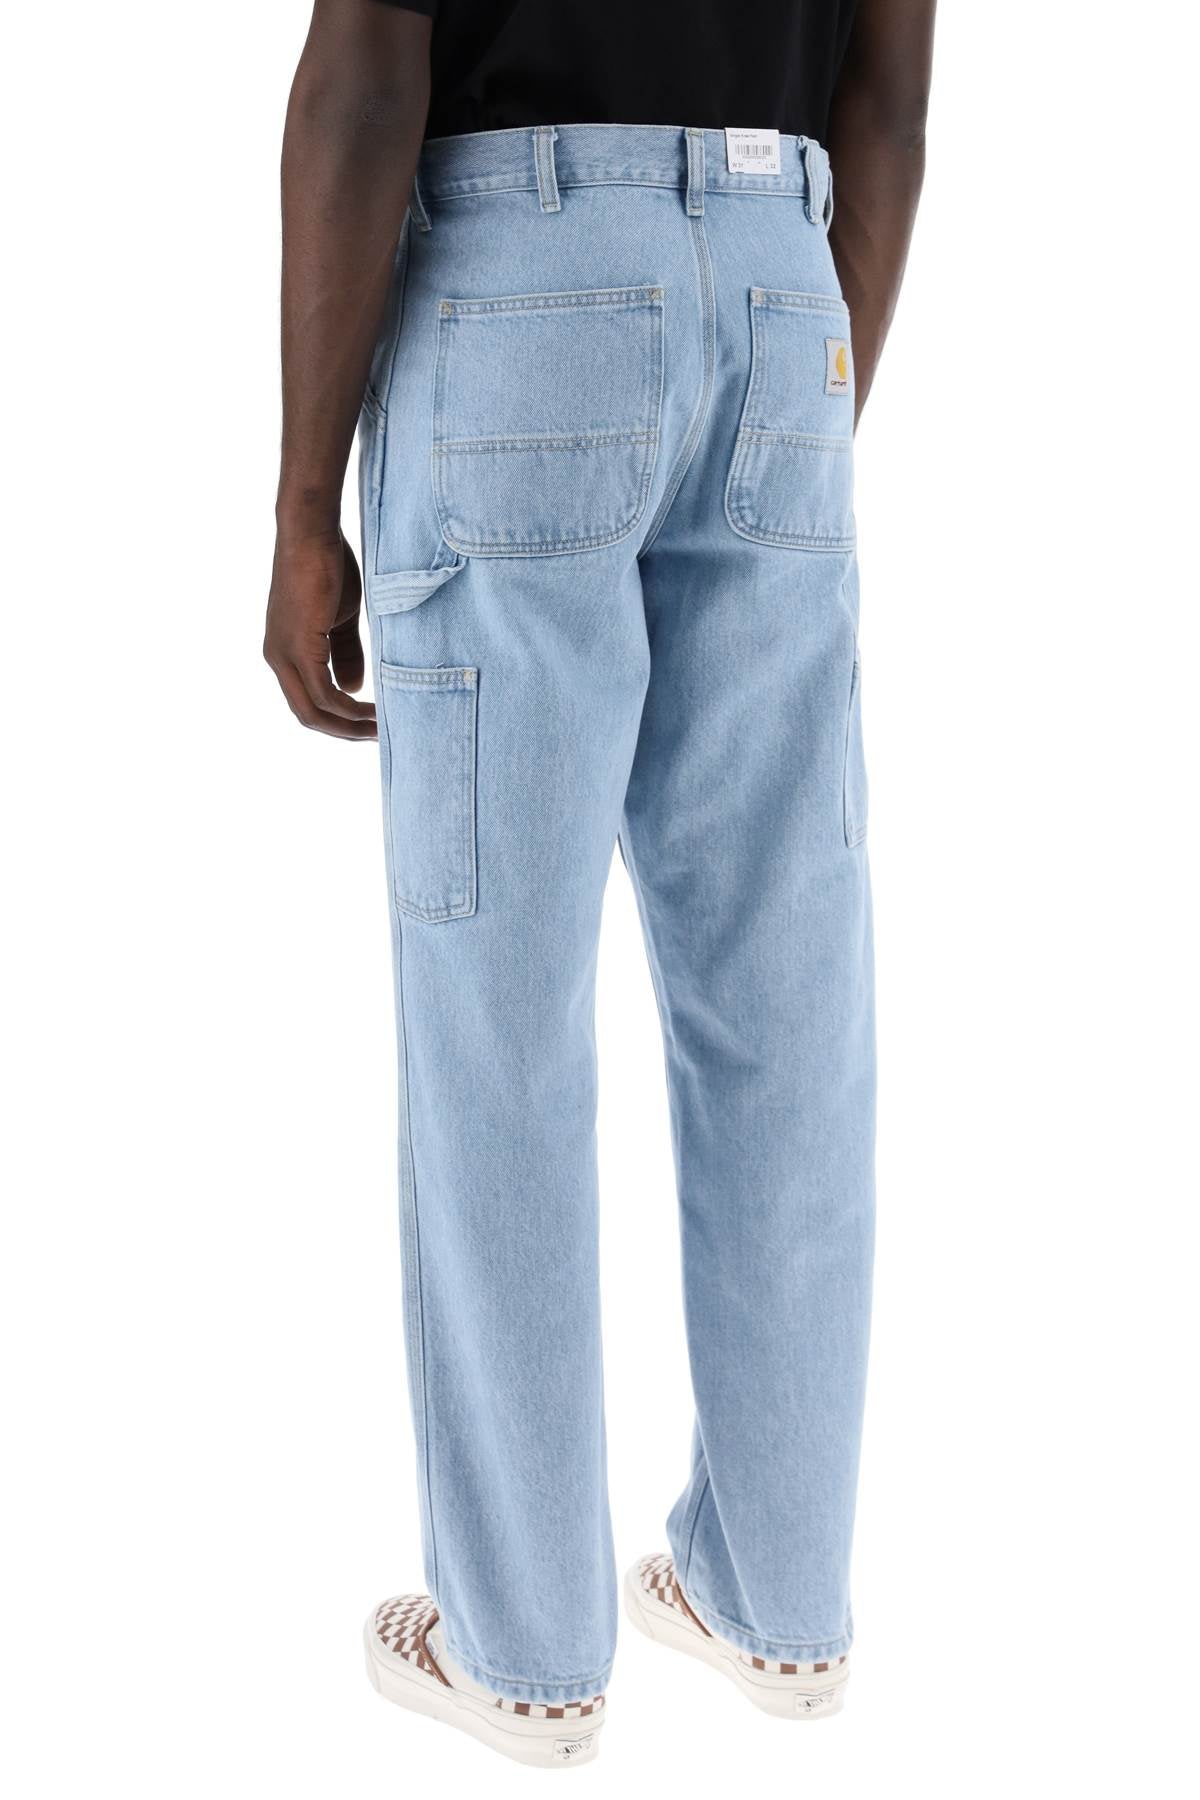 Carhartt Wip Loose Fit Single Knee Jeans   Blue